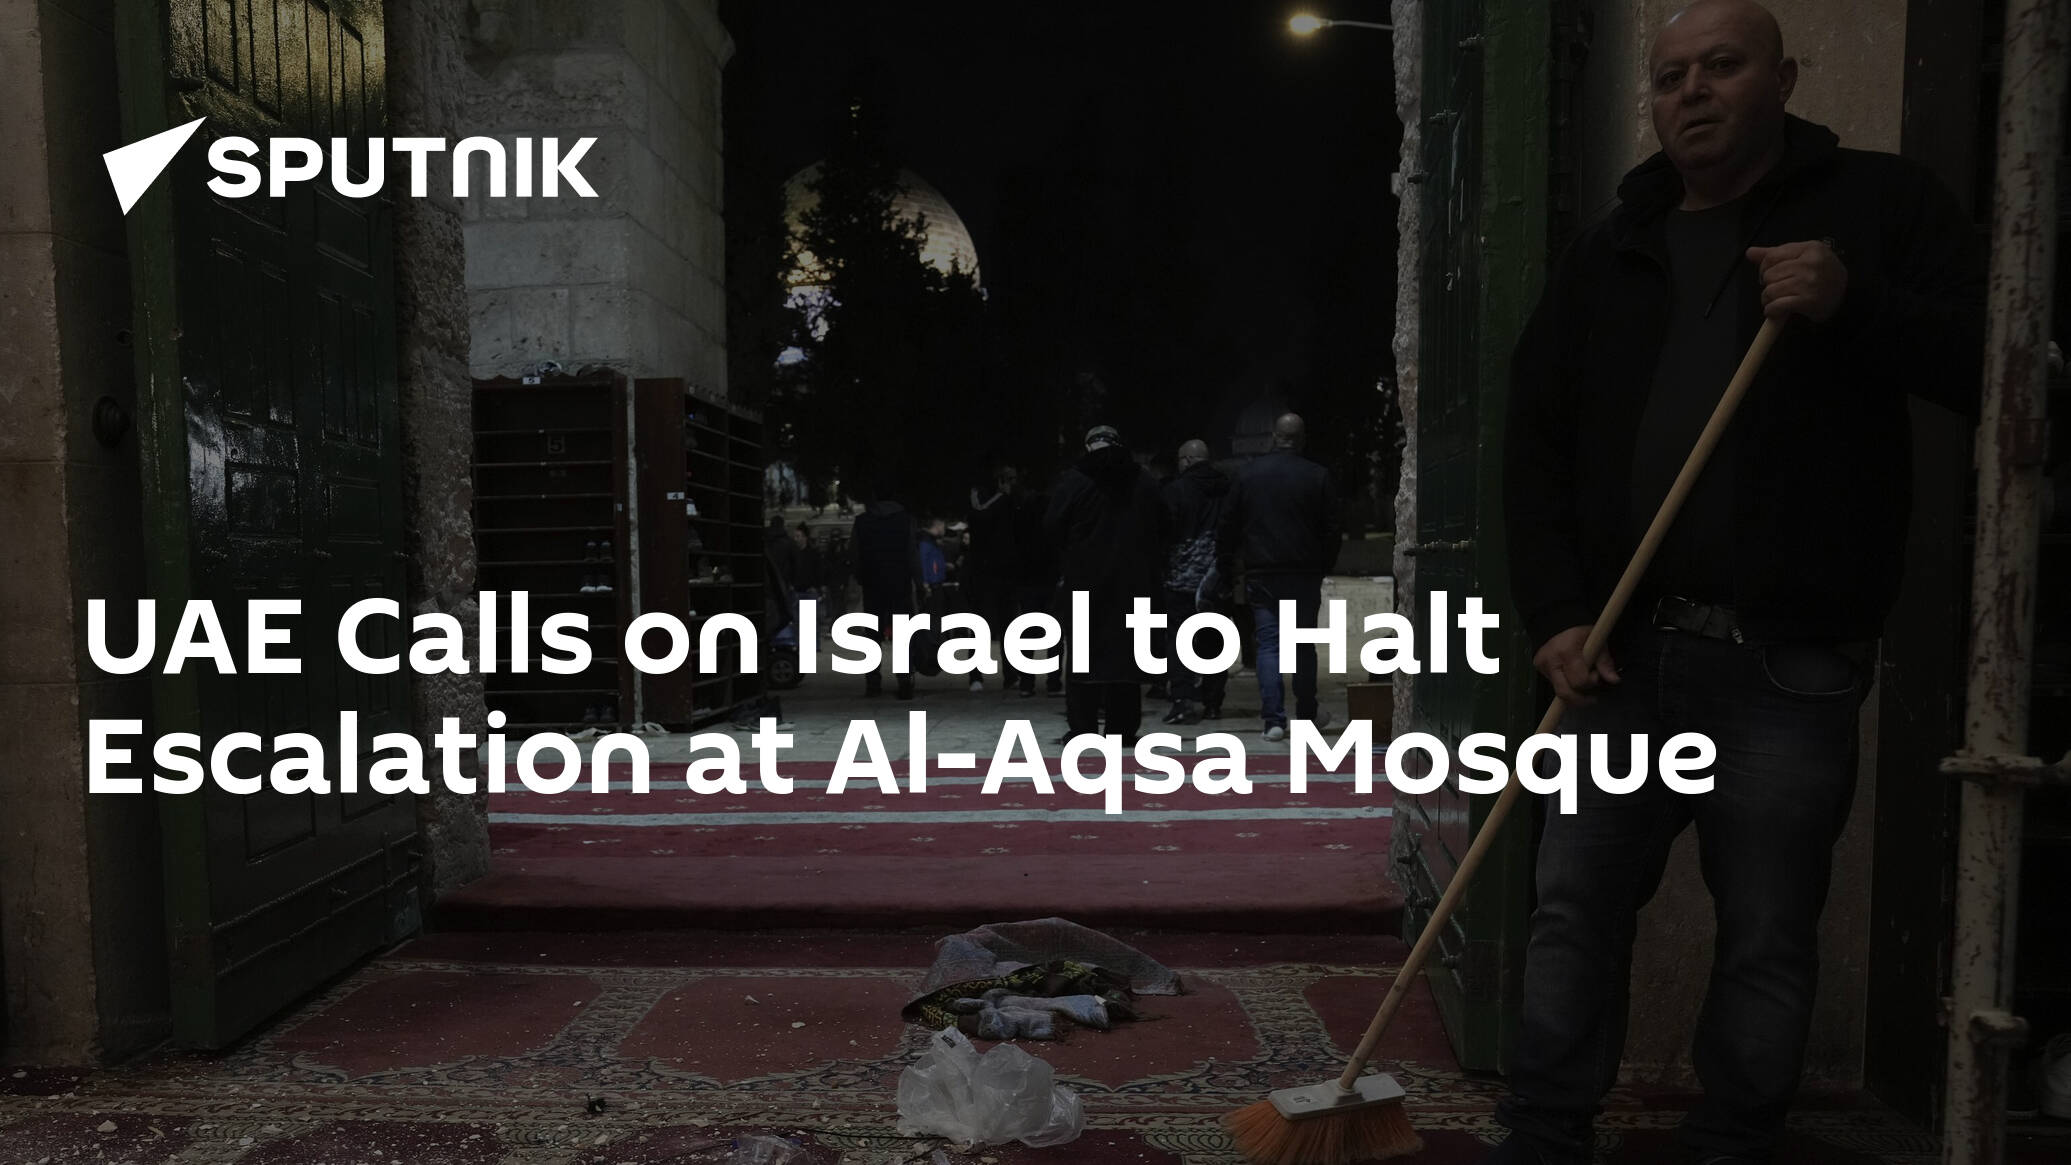 UAE Calls on Israel to Halt Escalation at Al-Aqsa Mosque – Foreign Ministry